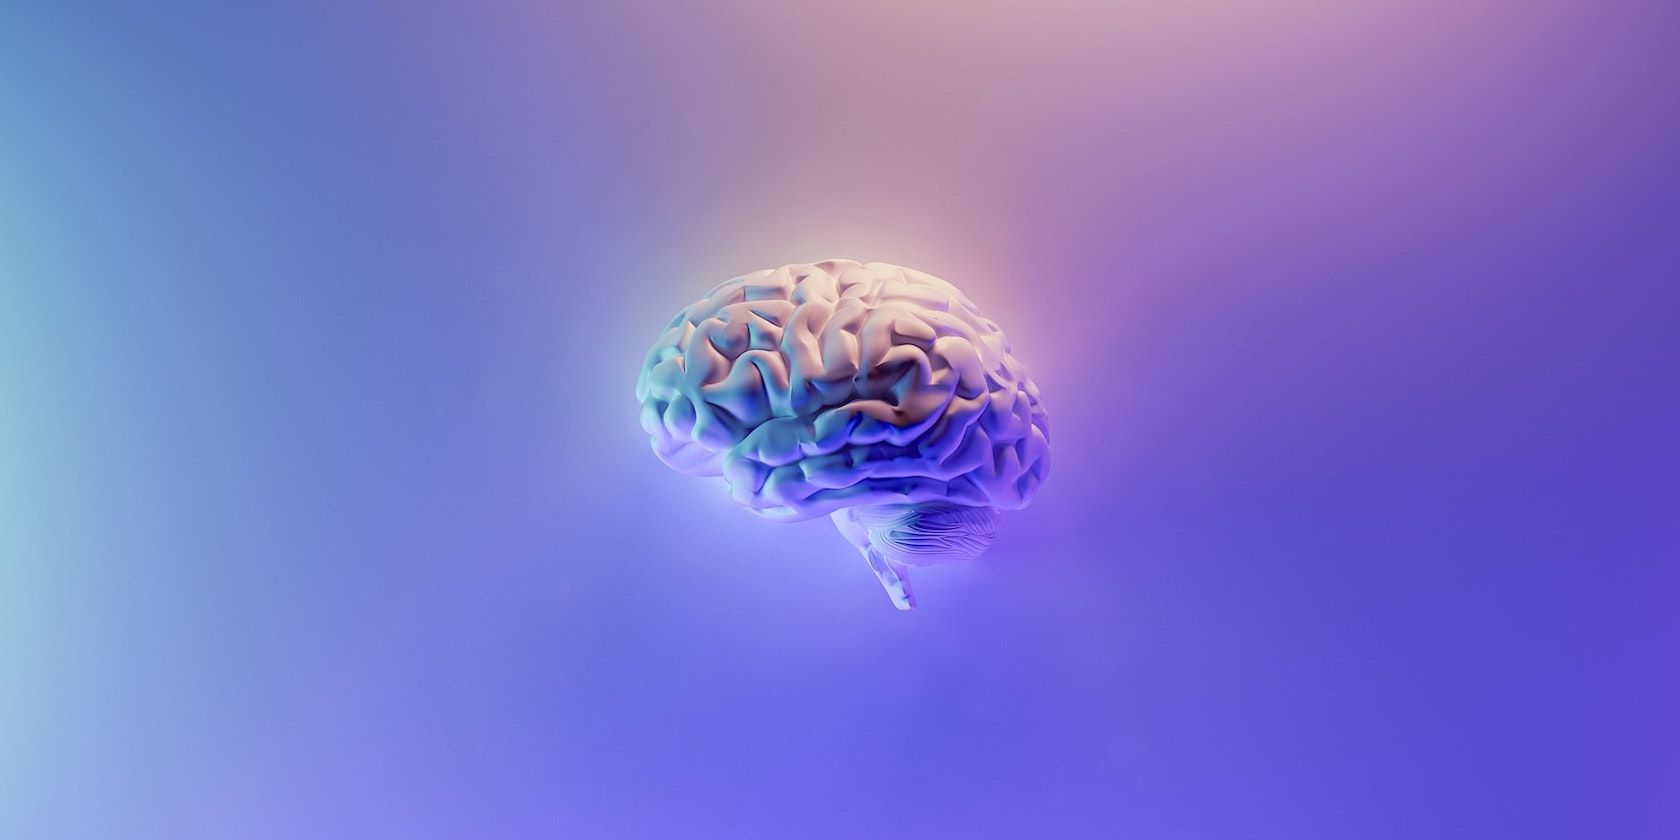 A digital render of a brain on a glowing purple background